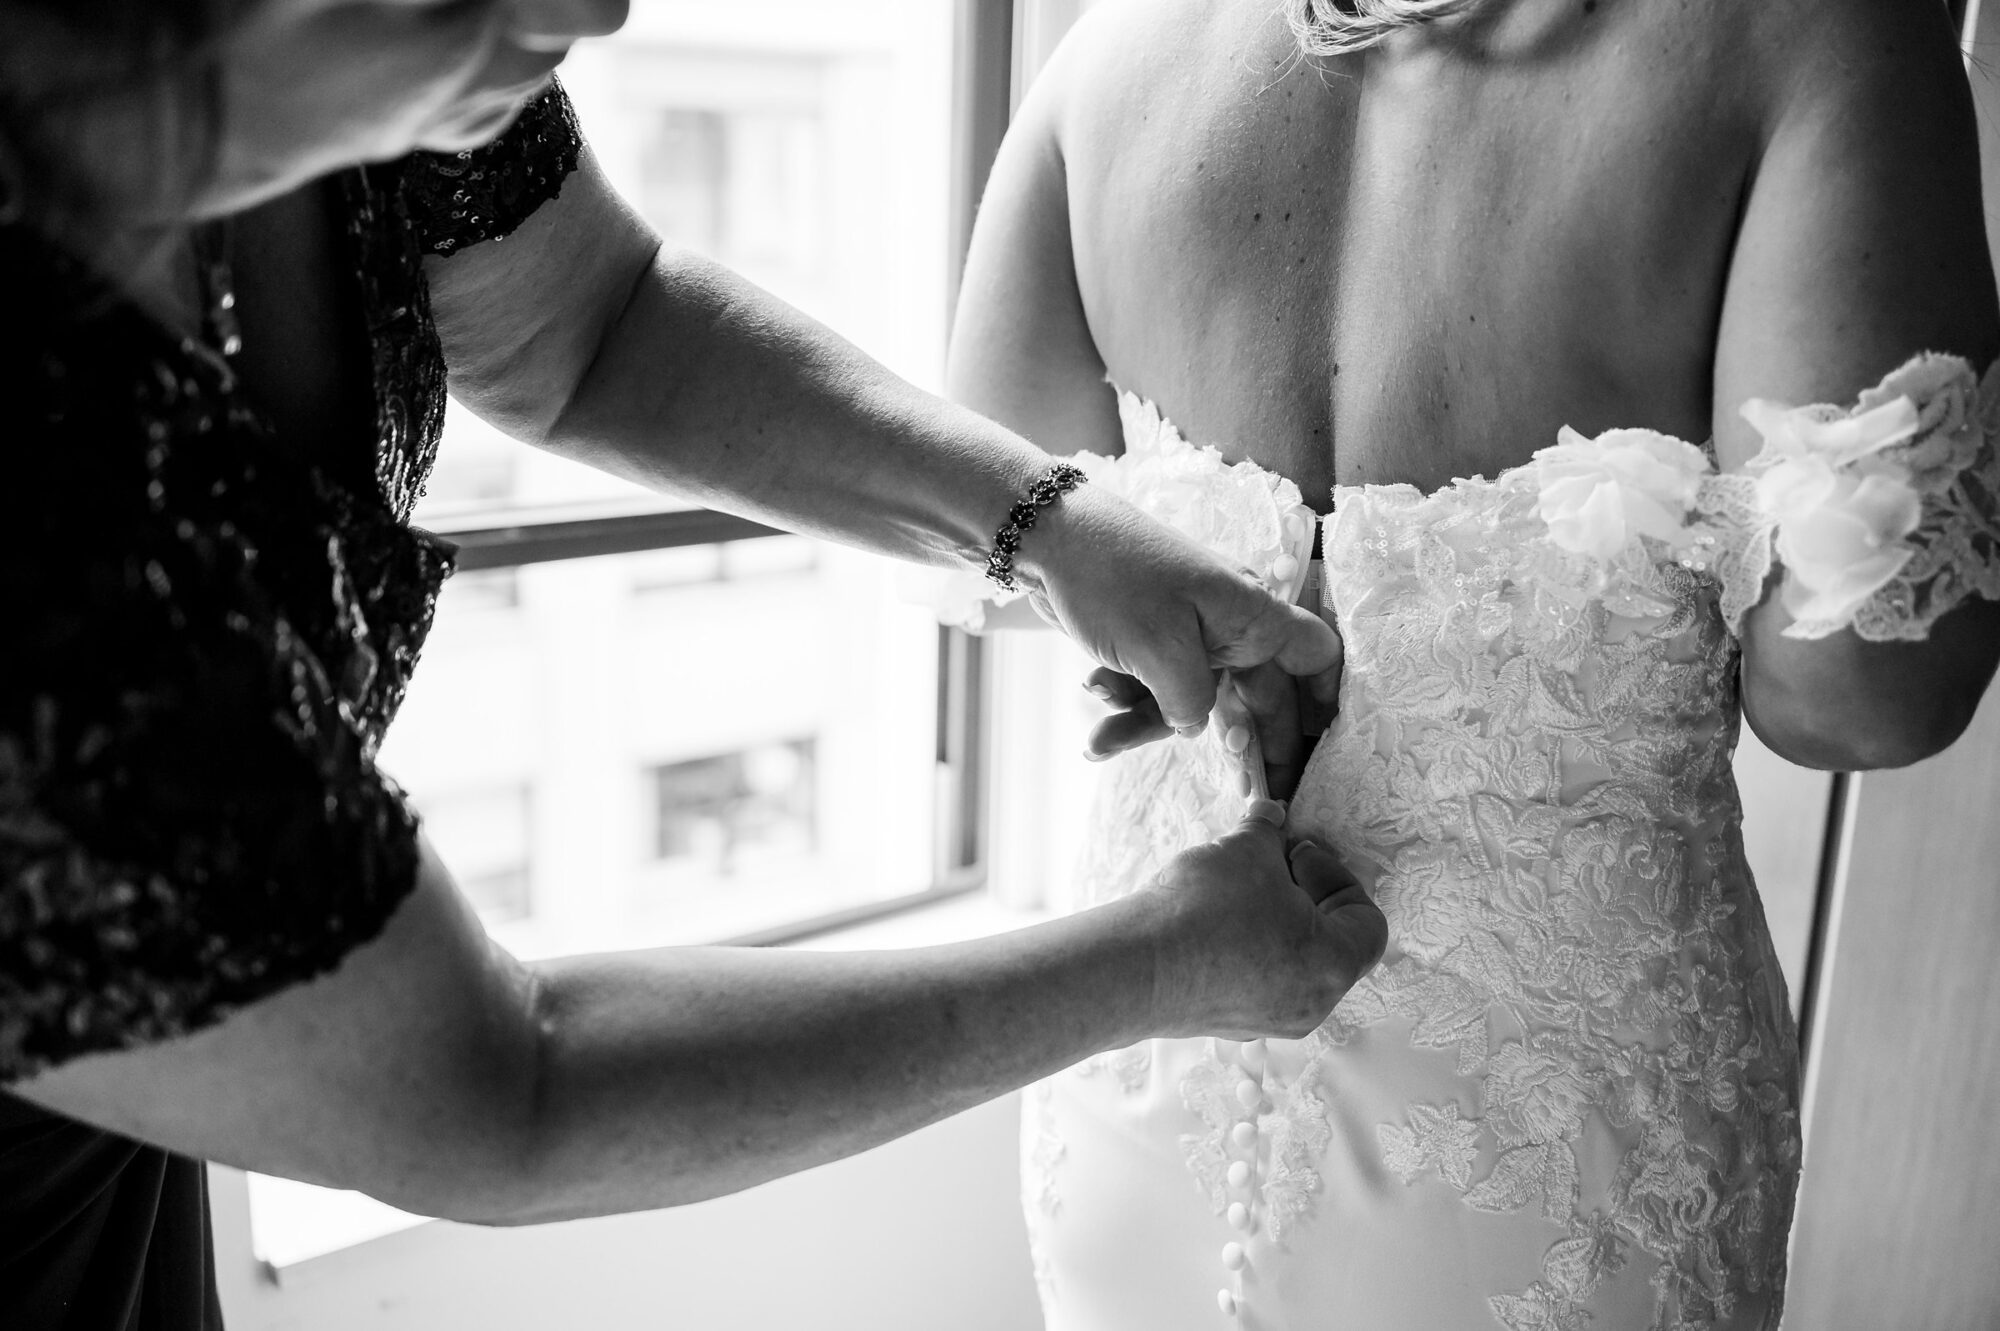 A woman putting on a bride's wedding dress.